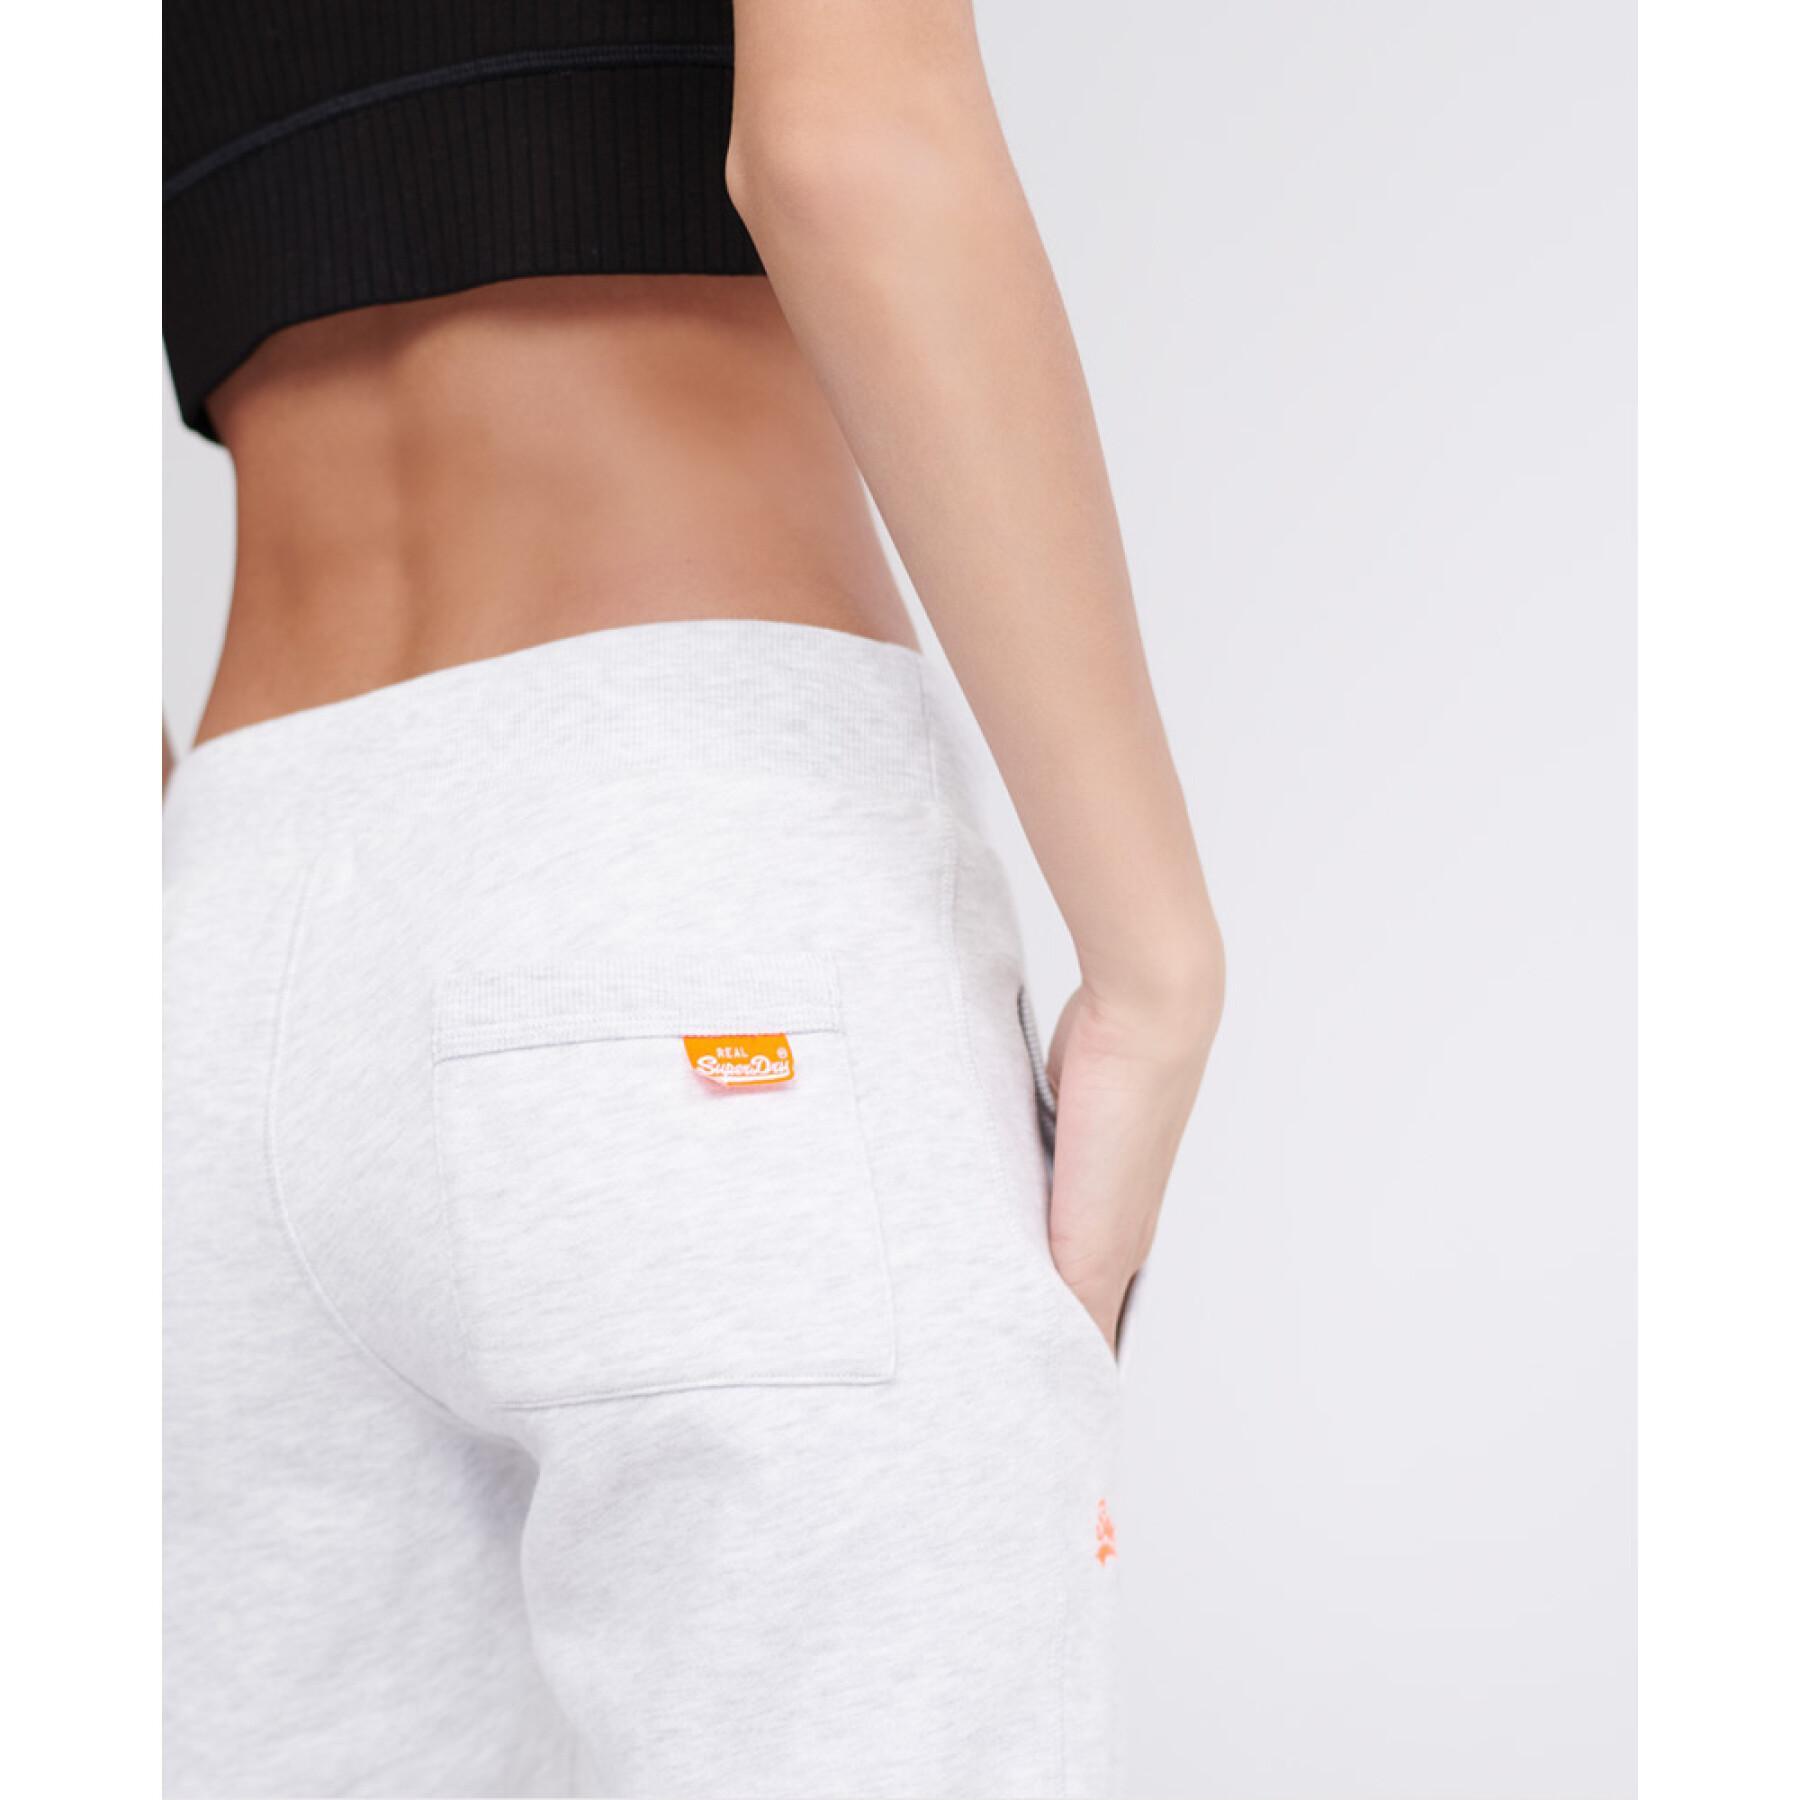 Pantalones de deporte para mujer Superdry Orange Label